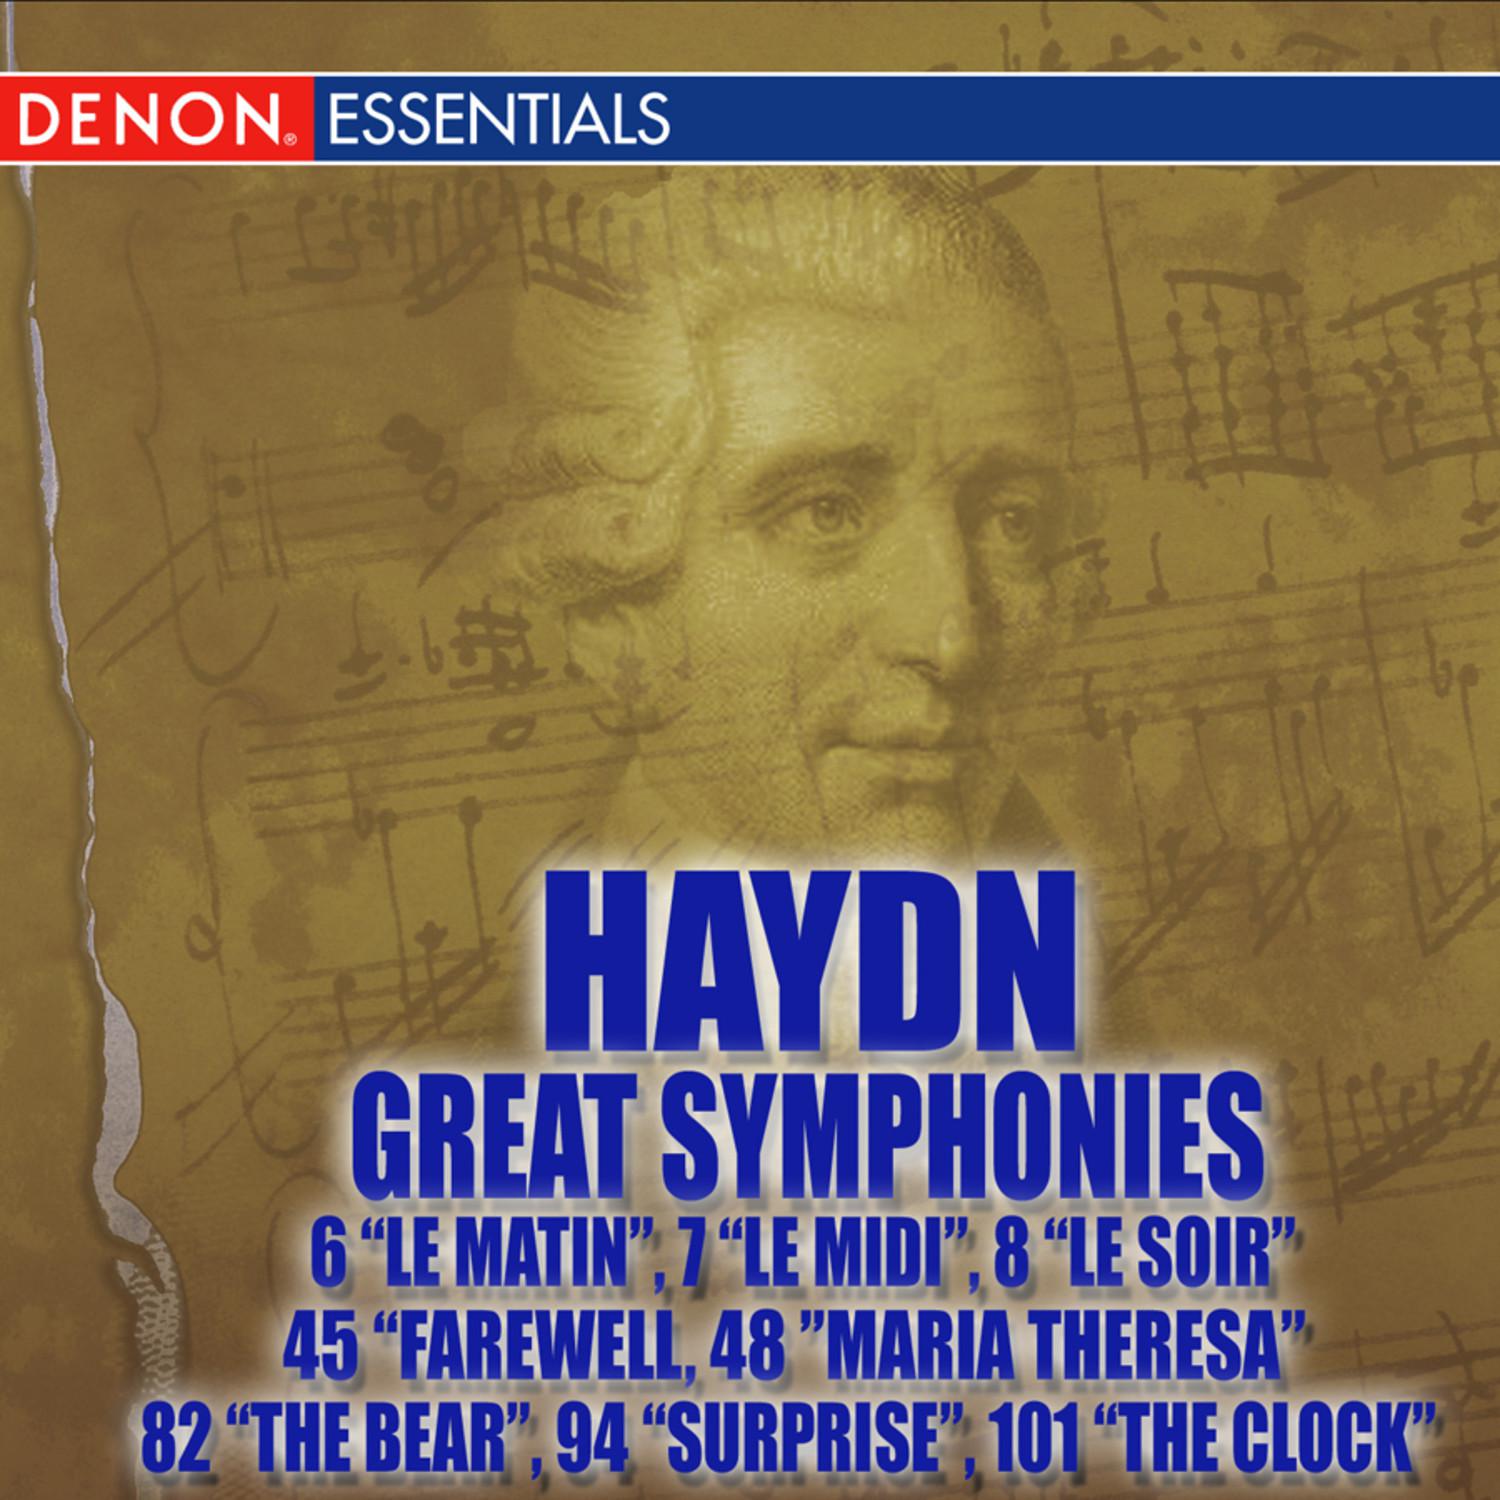 Haydn Symphony No. 7 in C Major "Le midi": I. Adagio - Allegro